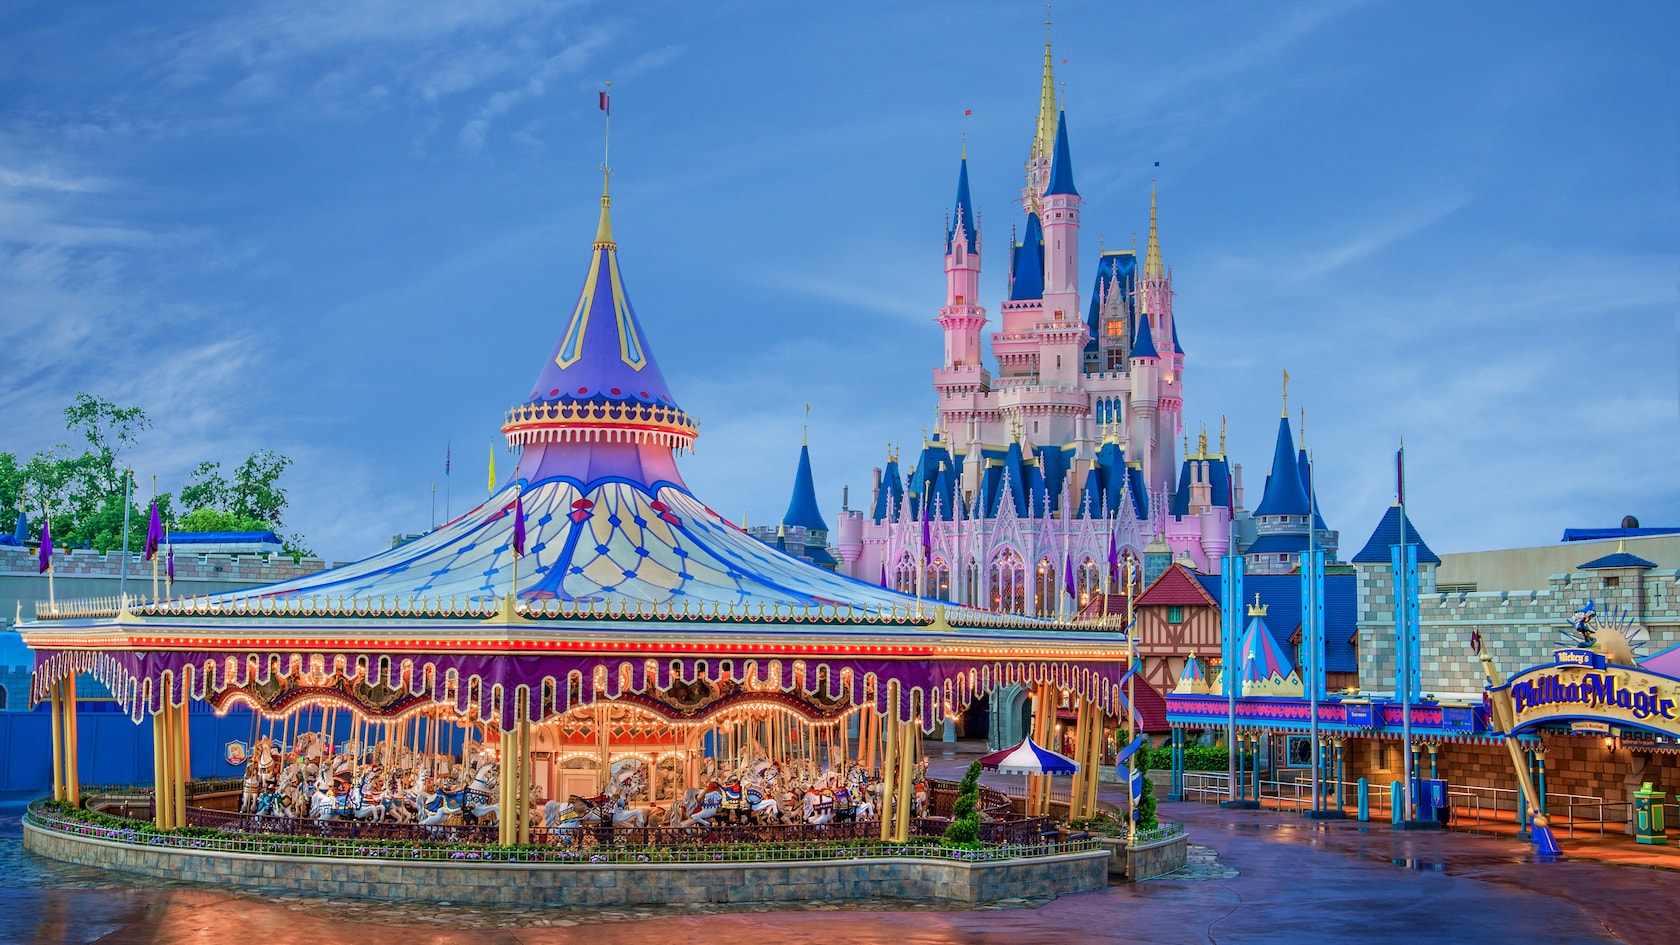 Prince Charming Regal Carrousel - Magic Kingdom Ride